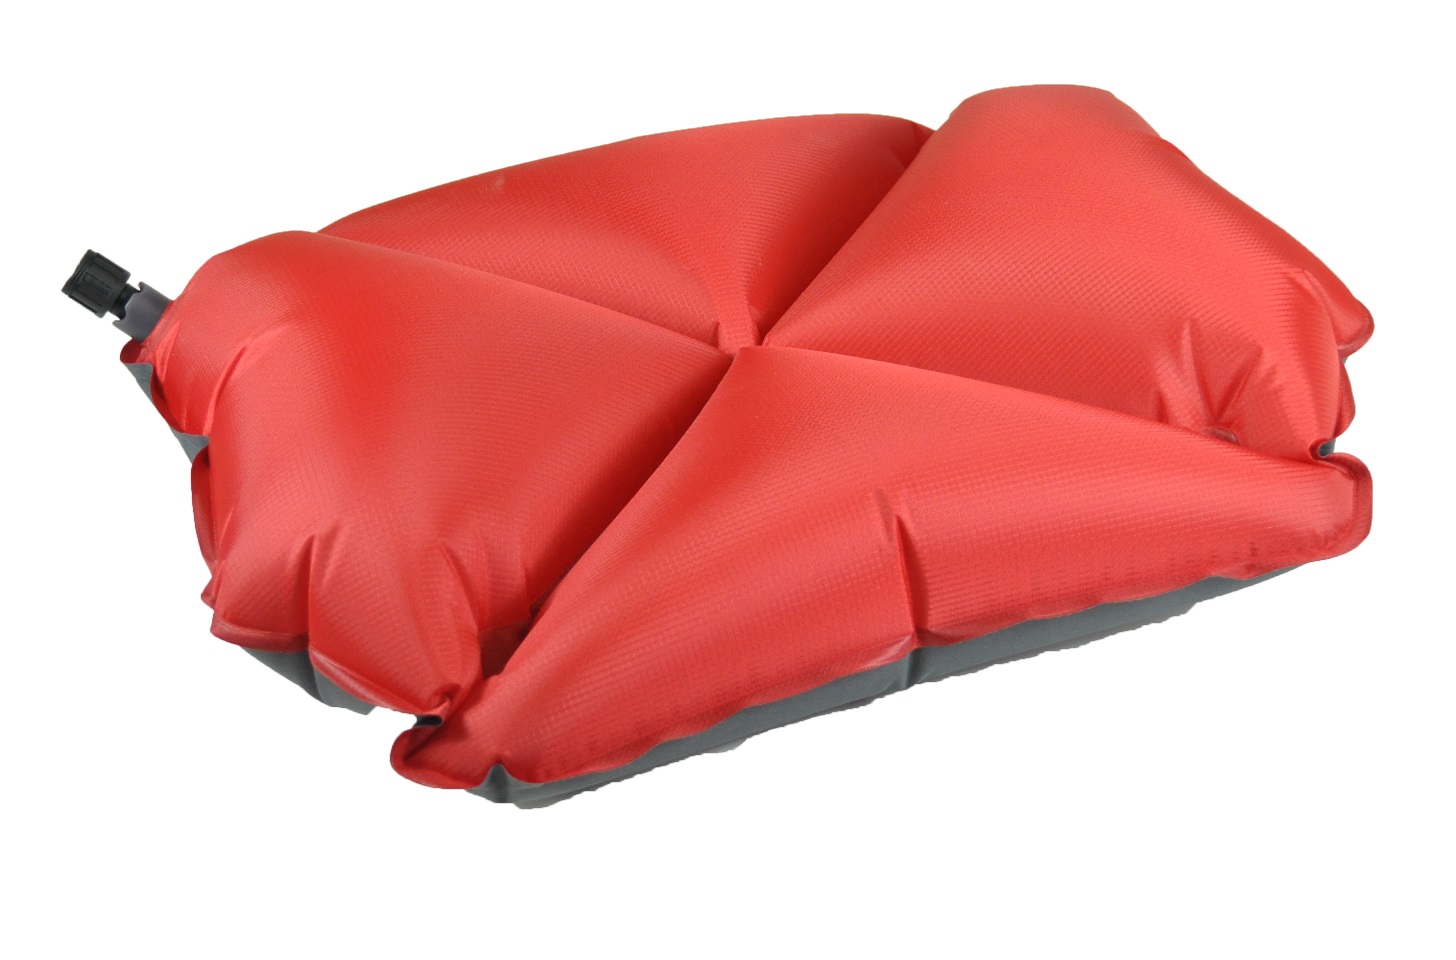 Klymit Pillow X Inflatable Pillow 12pxrd01c Campsaver